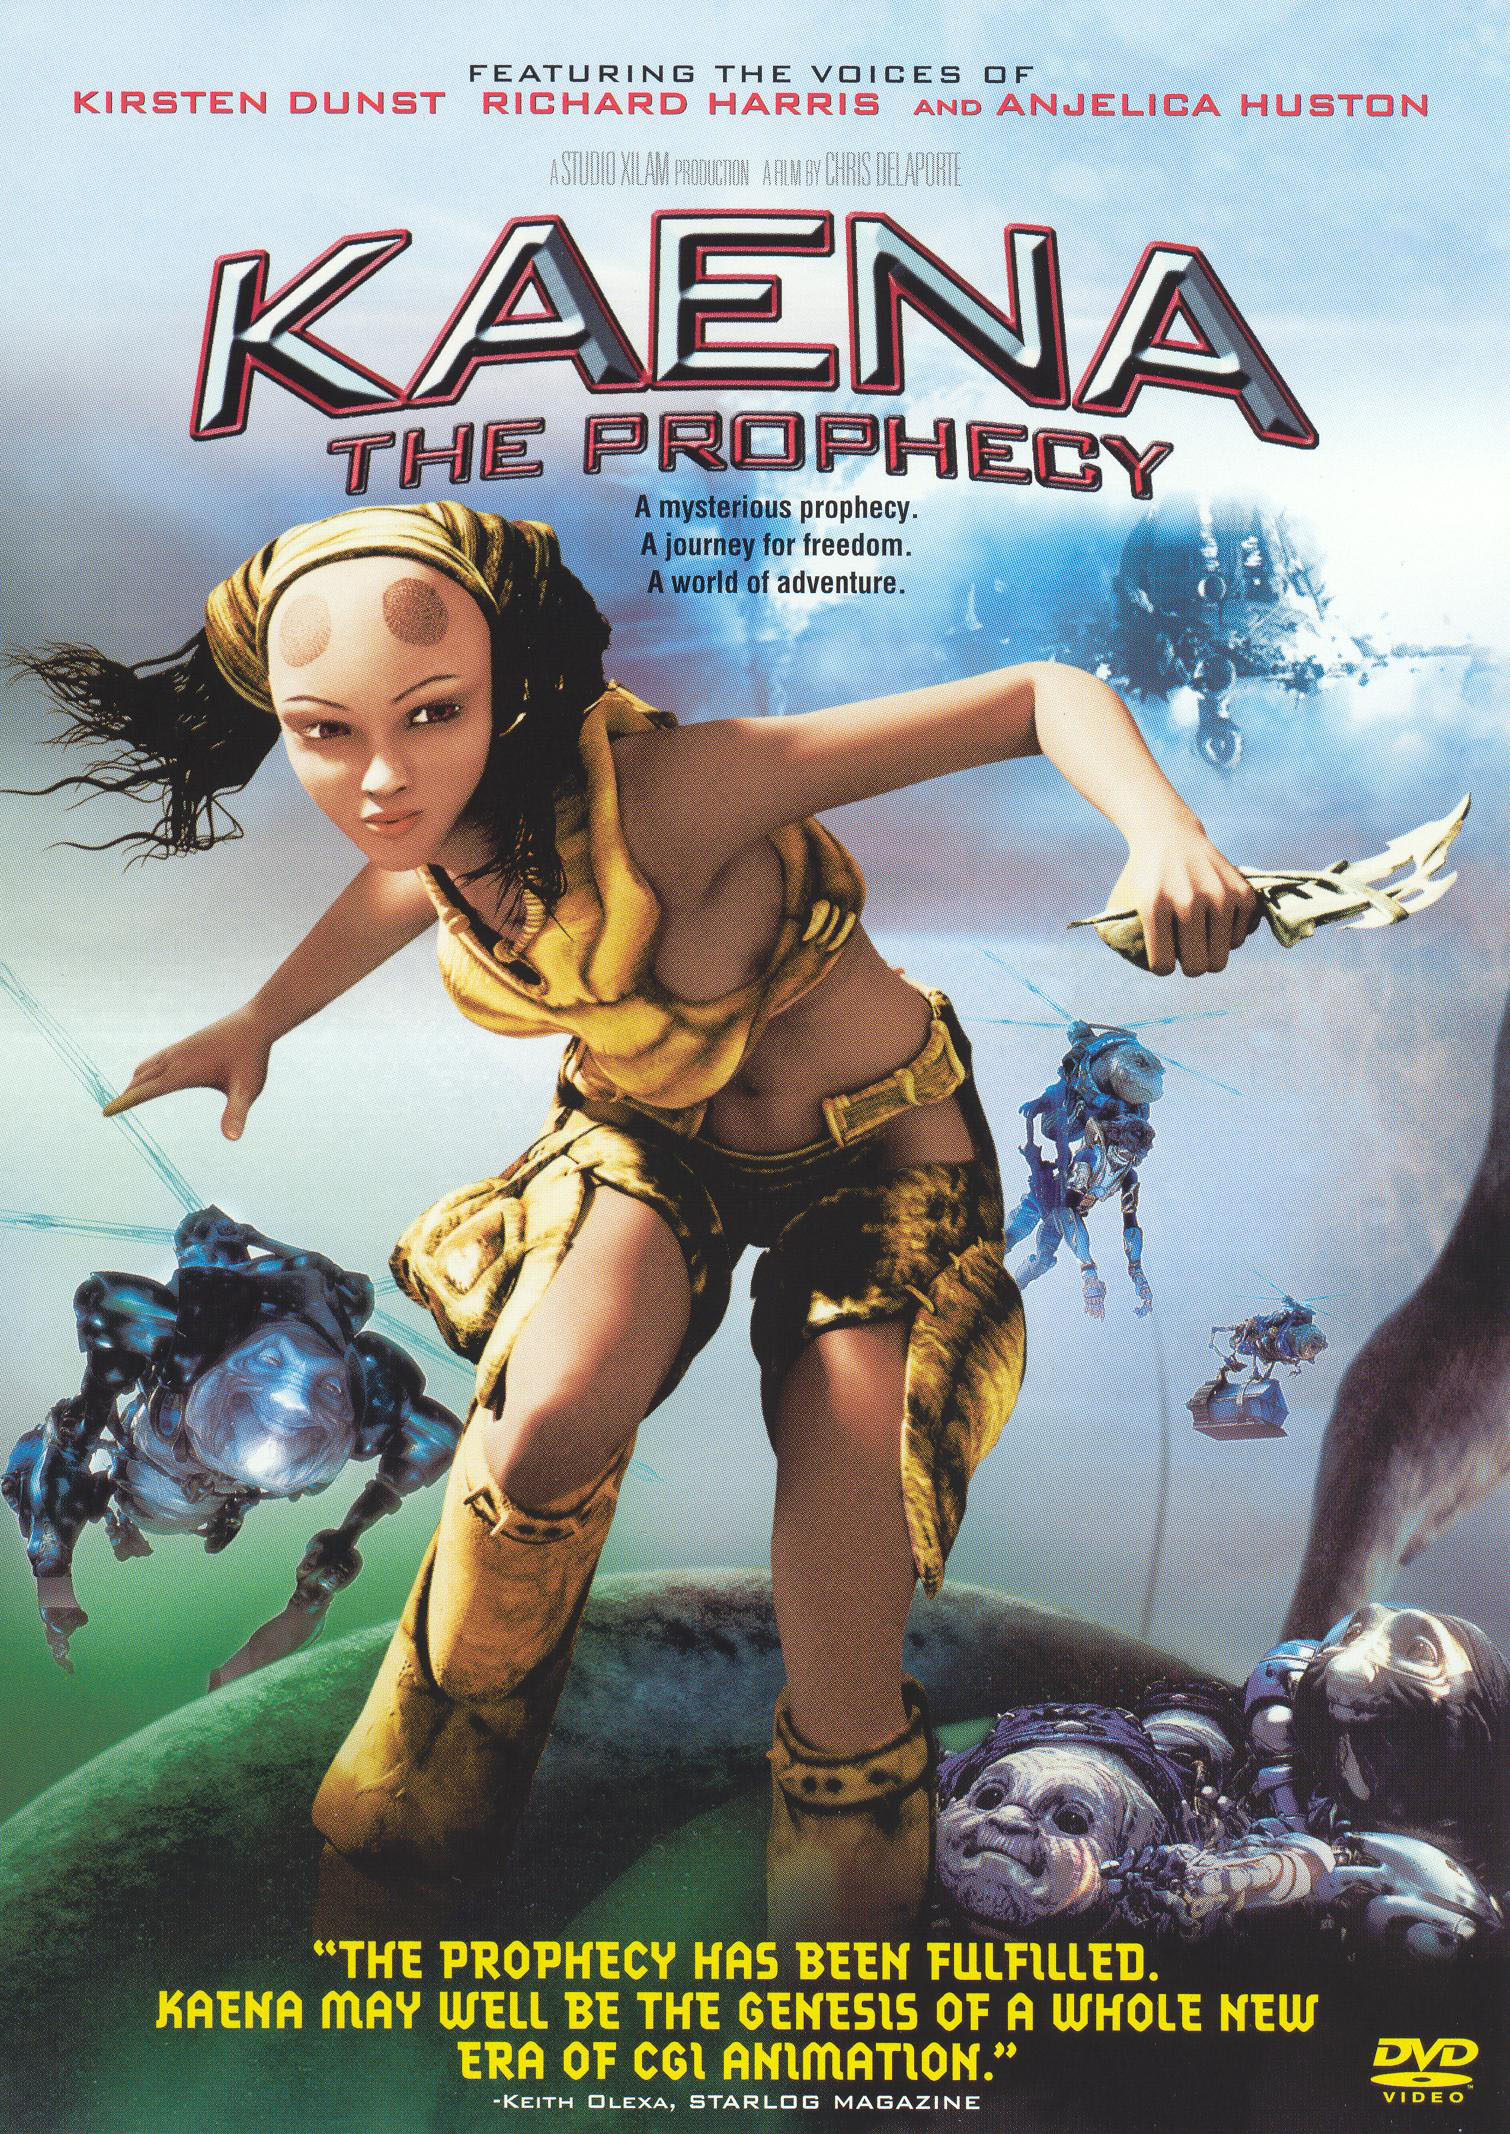 Kaena: The Prophecy [DVD] [2003] - Best Buy